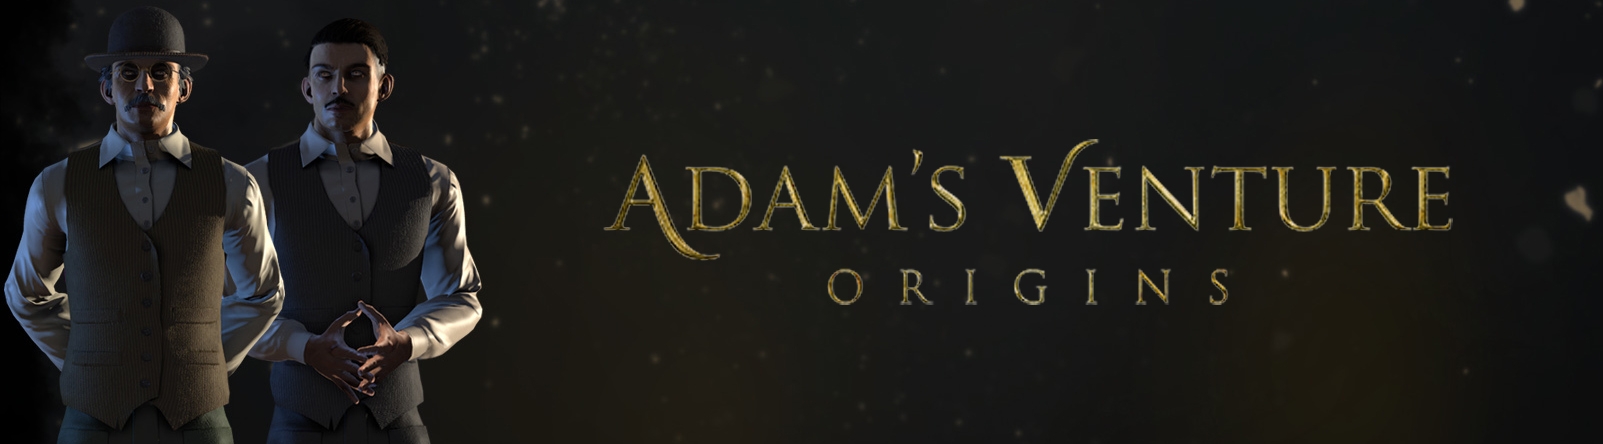 Banner Adams Venture Origins